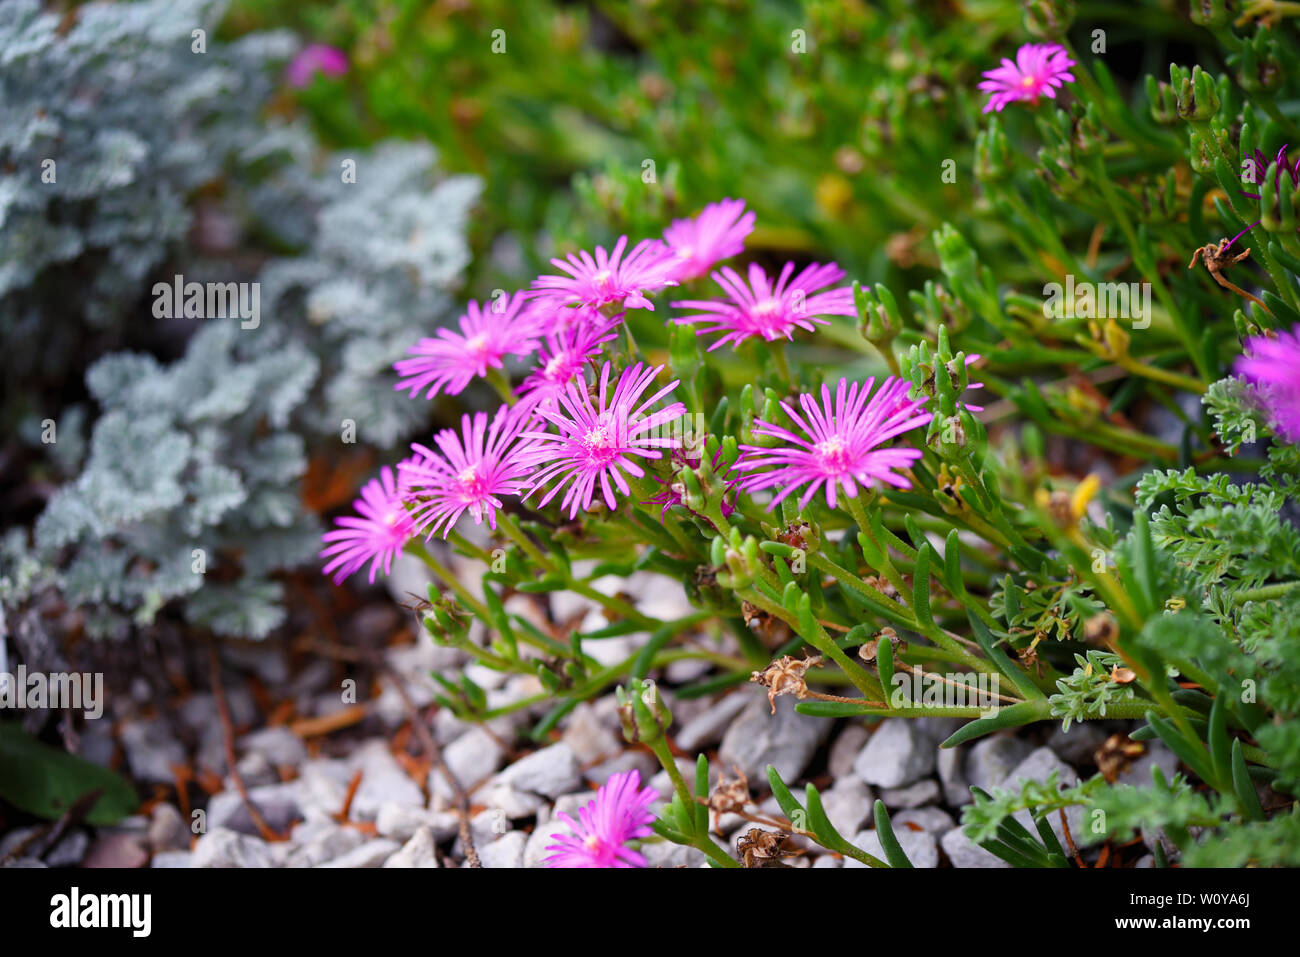 Delosperma cooperi flowers in the garden Stock Photo